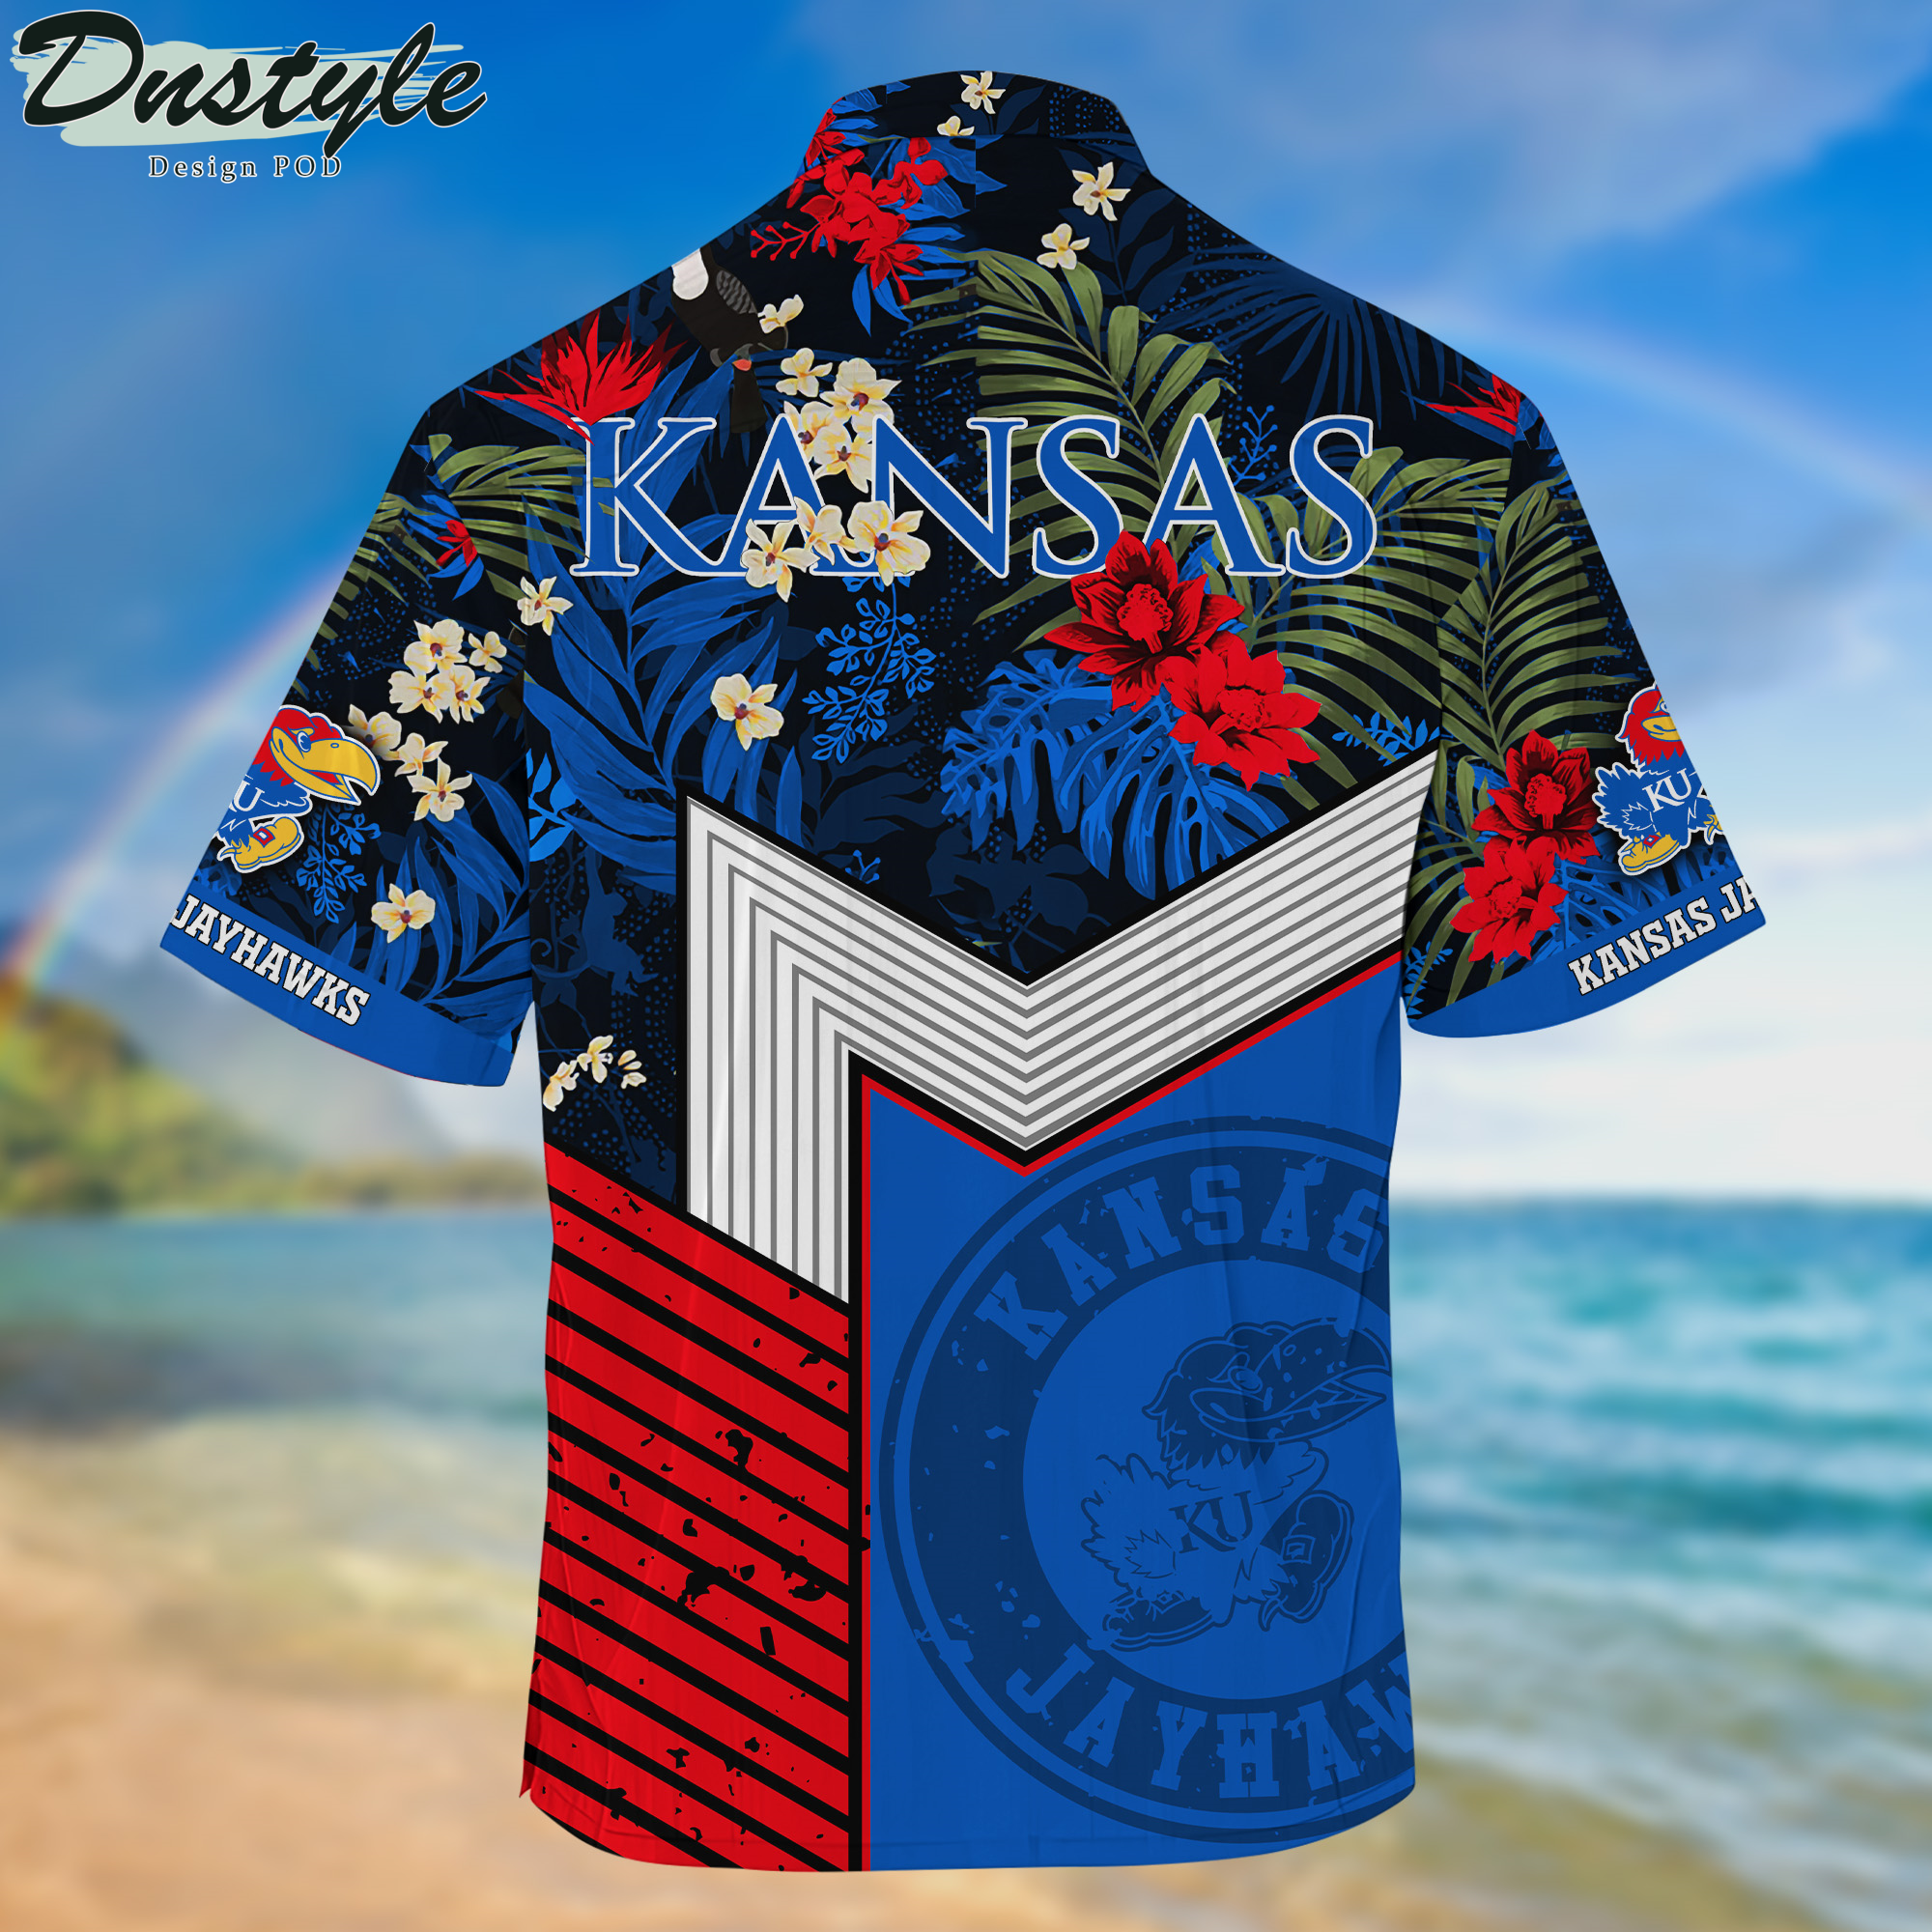 Kansas Jayhawks Hawaii Shirt And Shorts New Collection